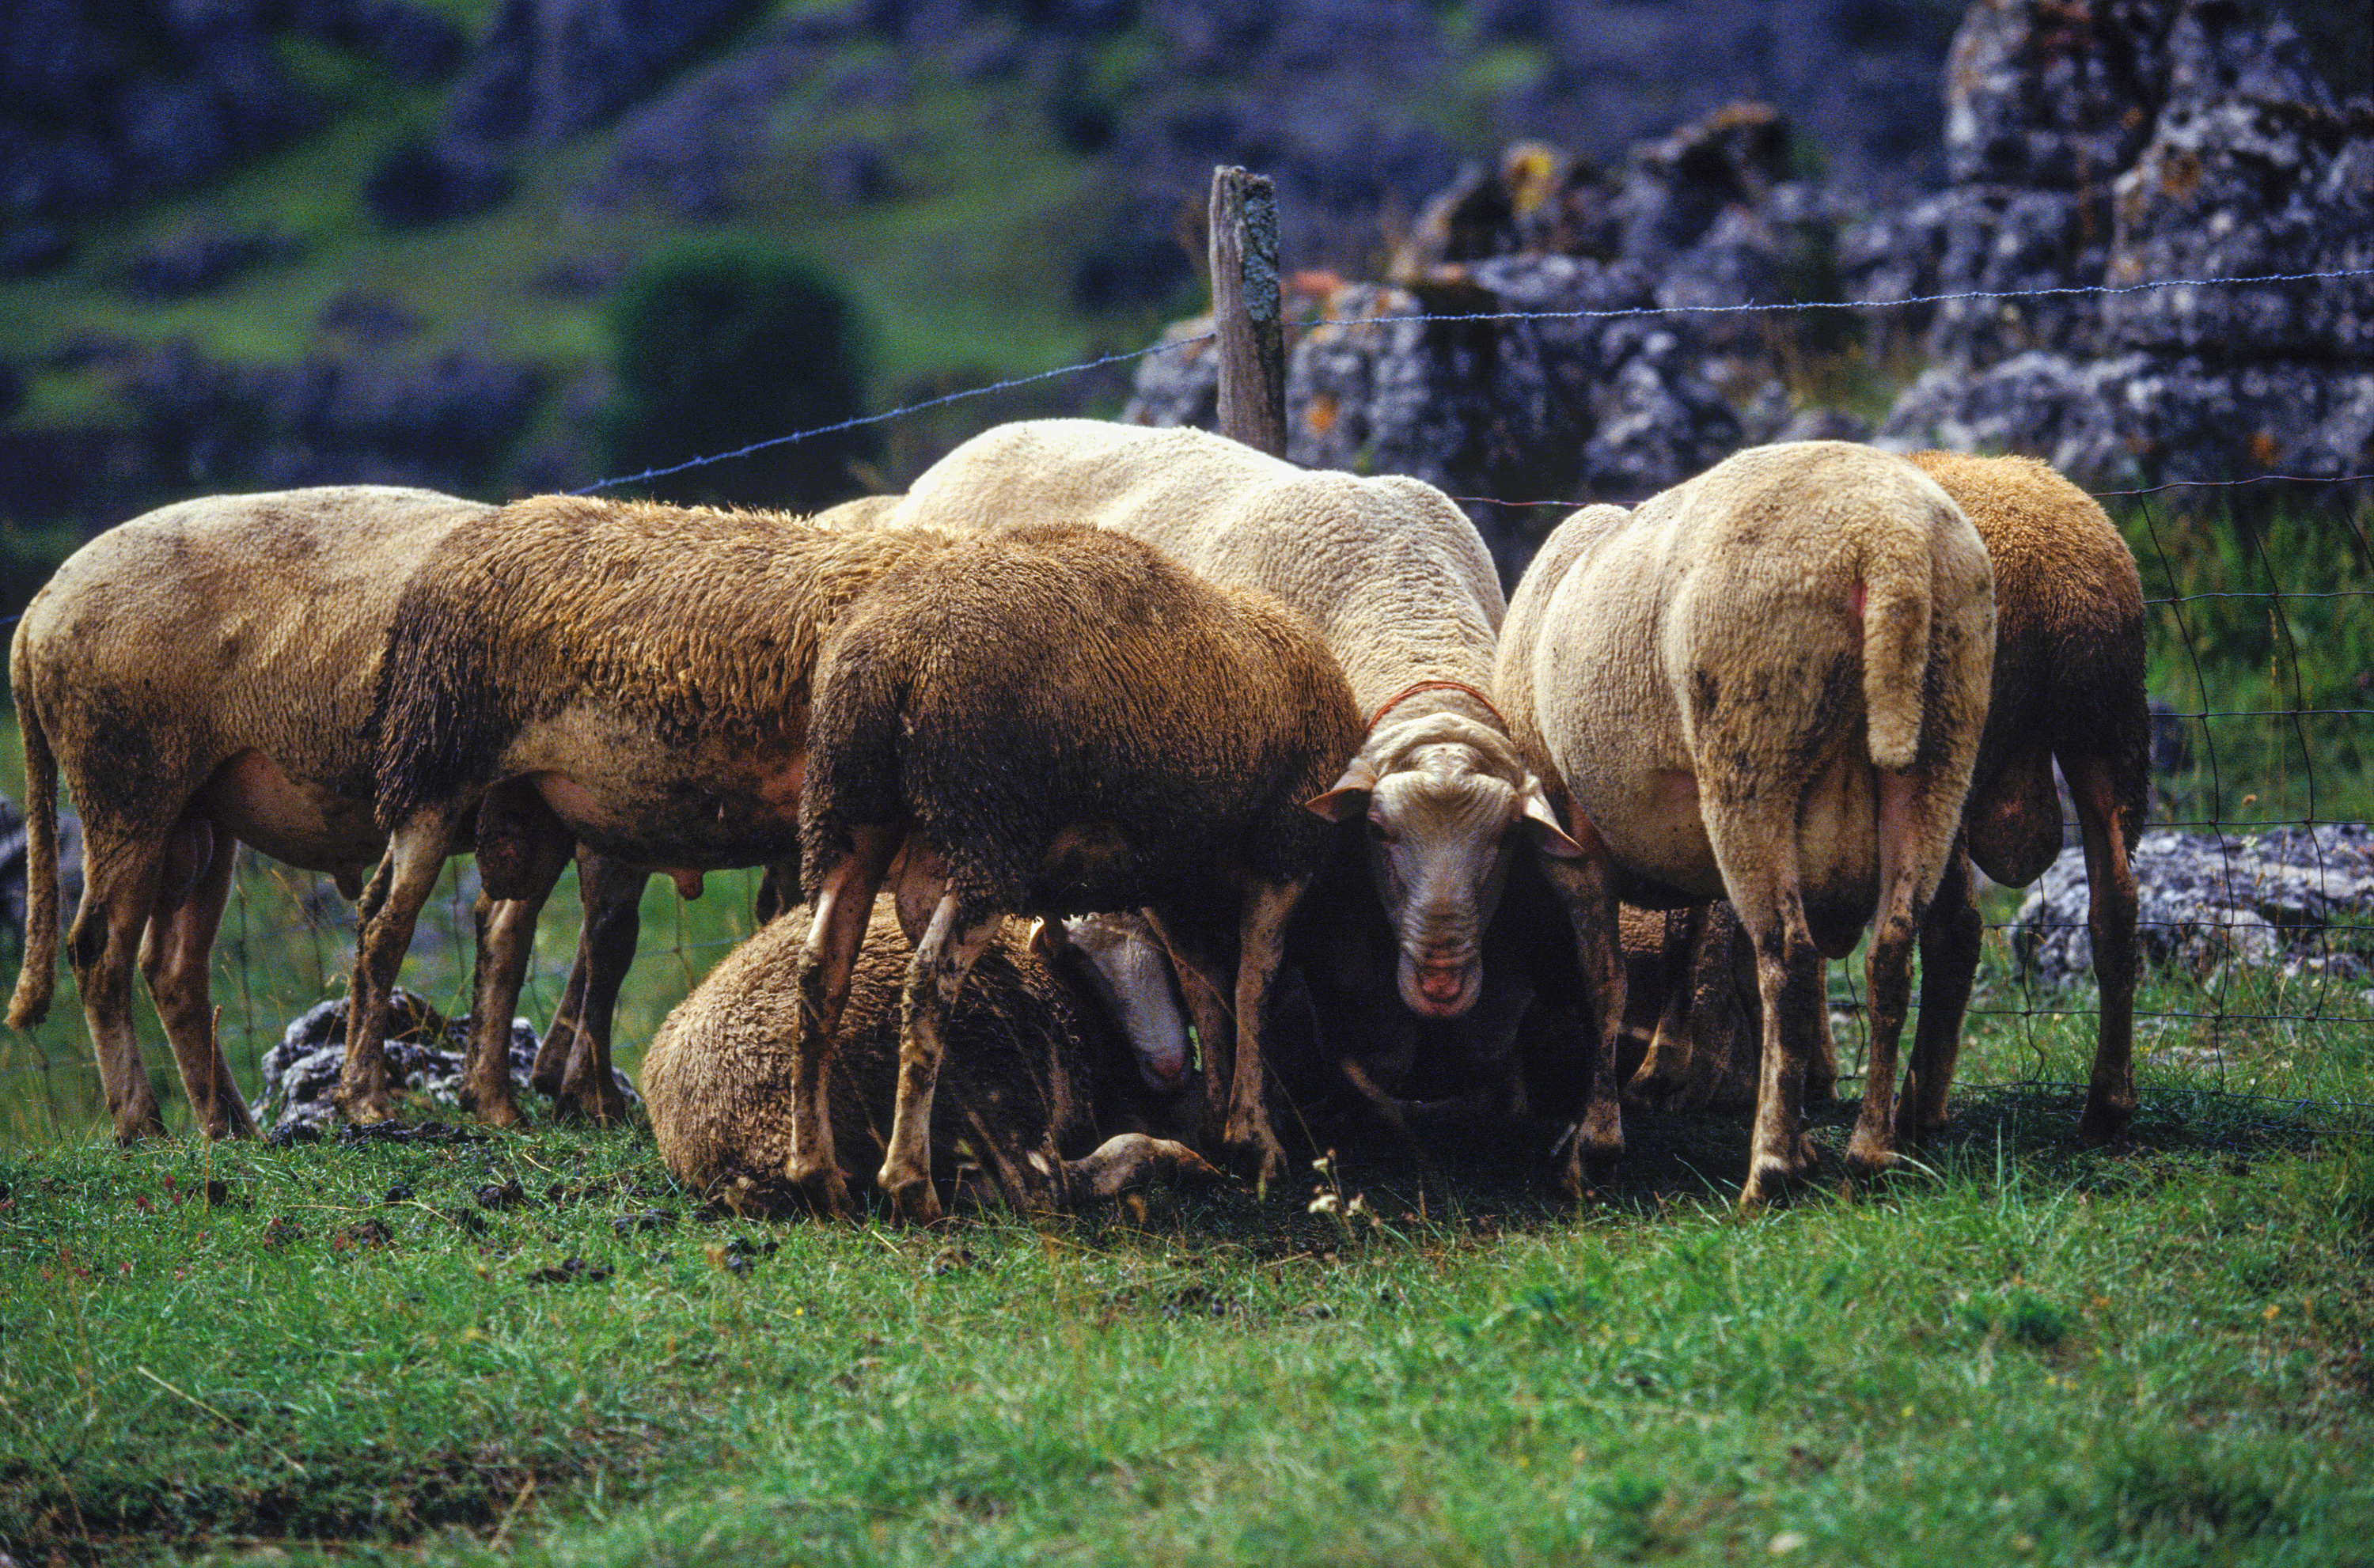 Sheep South France